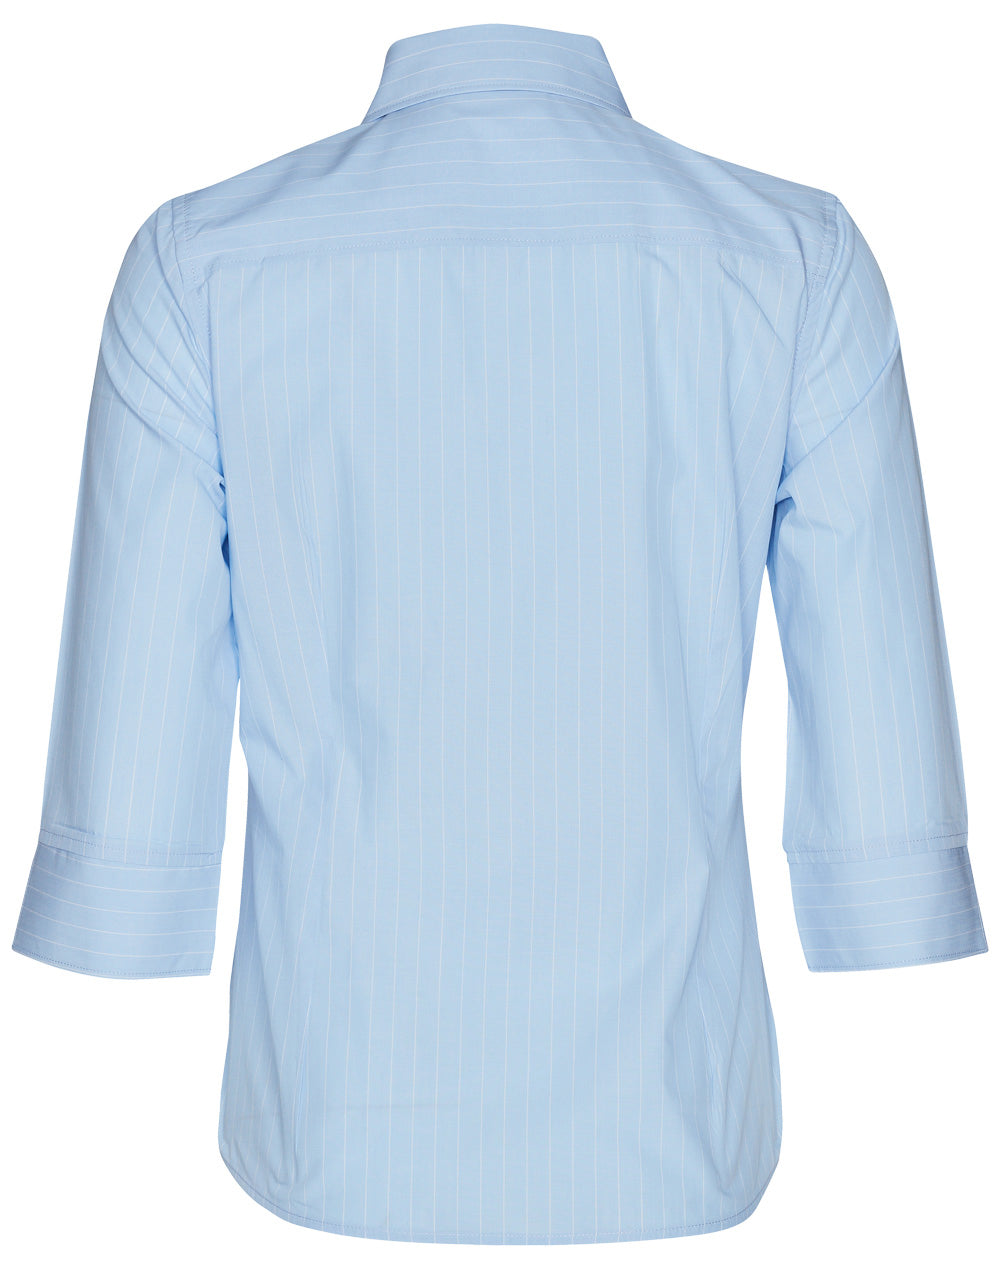 Winning Spirit -Women's Pin Stripe 3/4 Sleeve Shirt -M8223